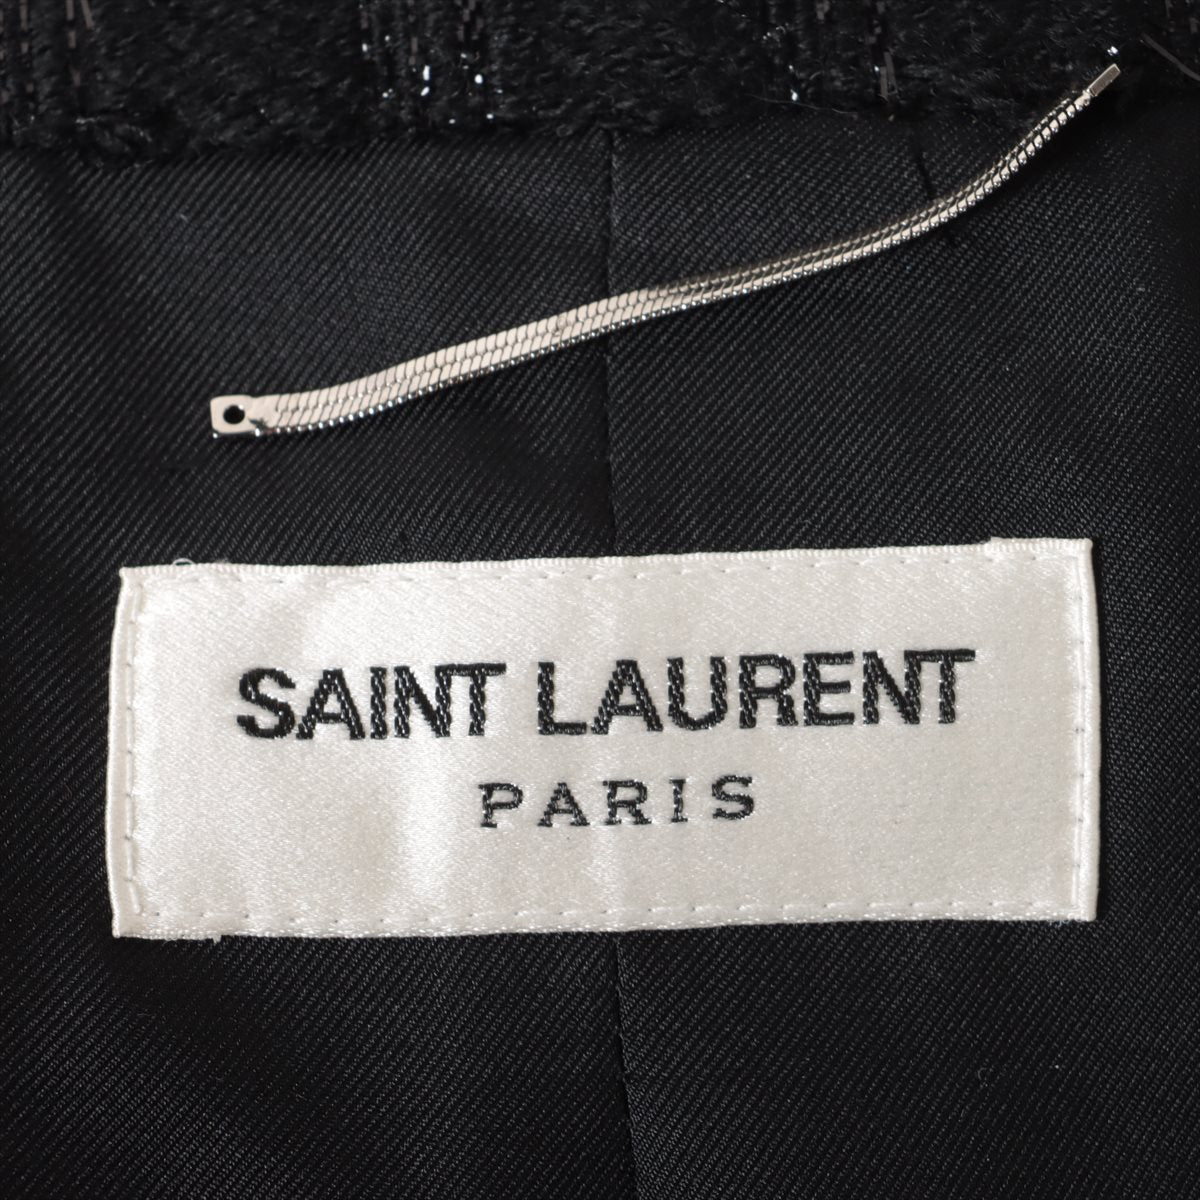 SAINT LAURENT PARIS テーラードジャケット 46(M位) 黒なし生地の厚さ